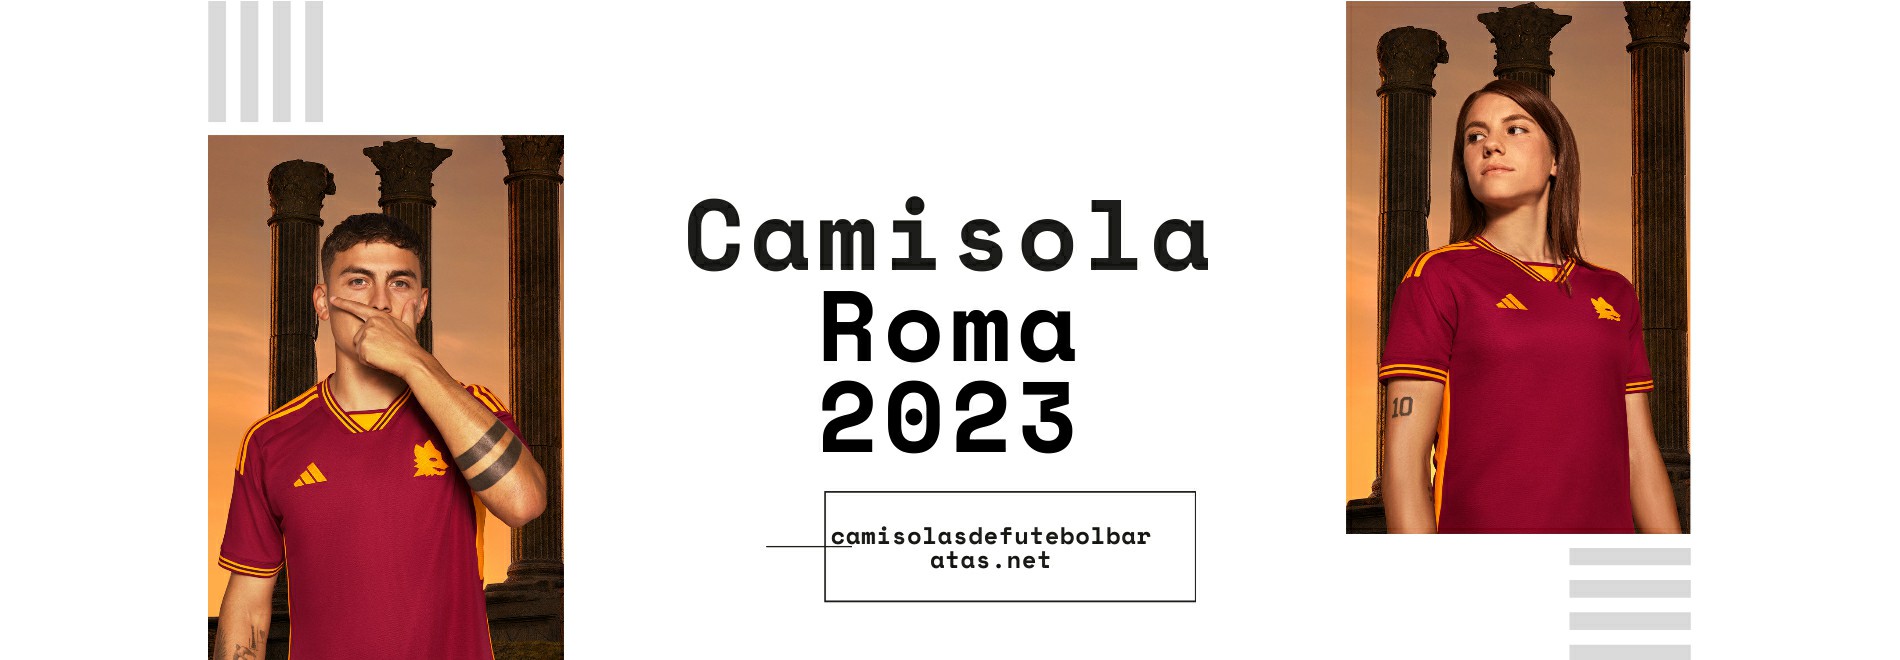 Camisola Roma 2023-2024